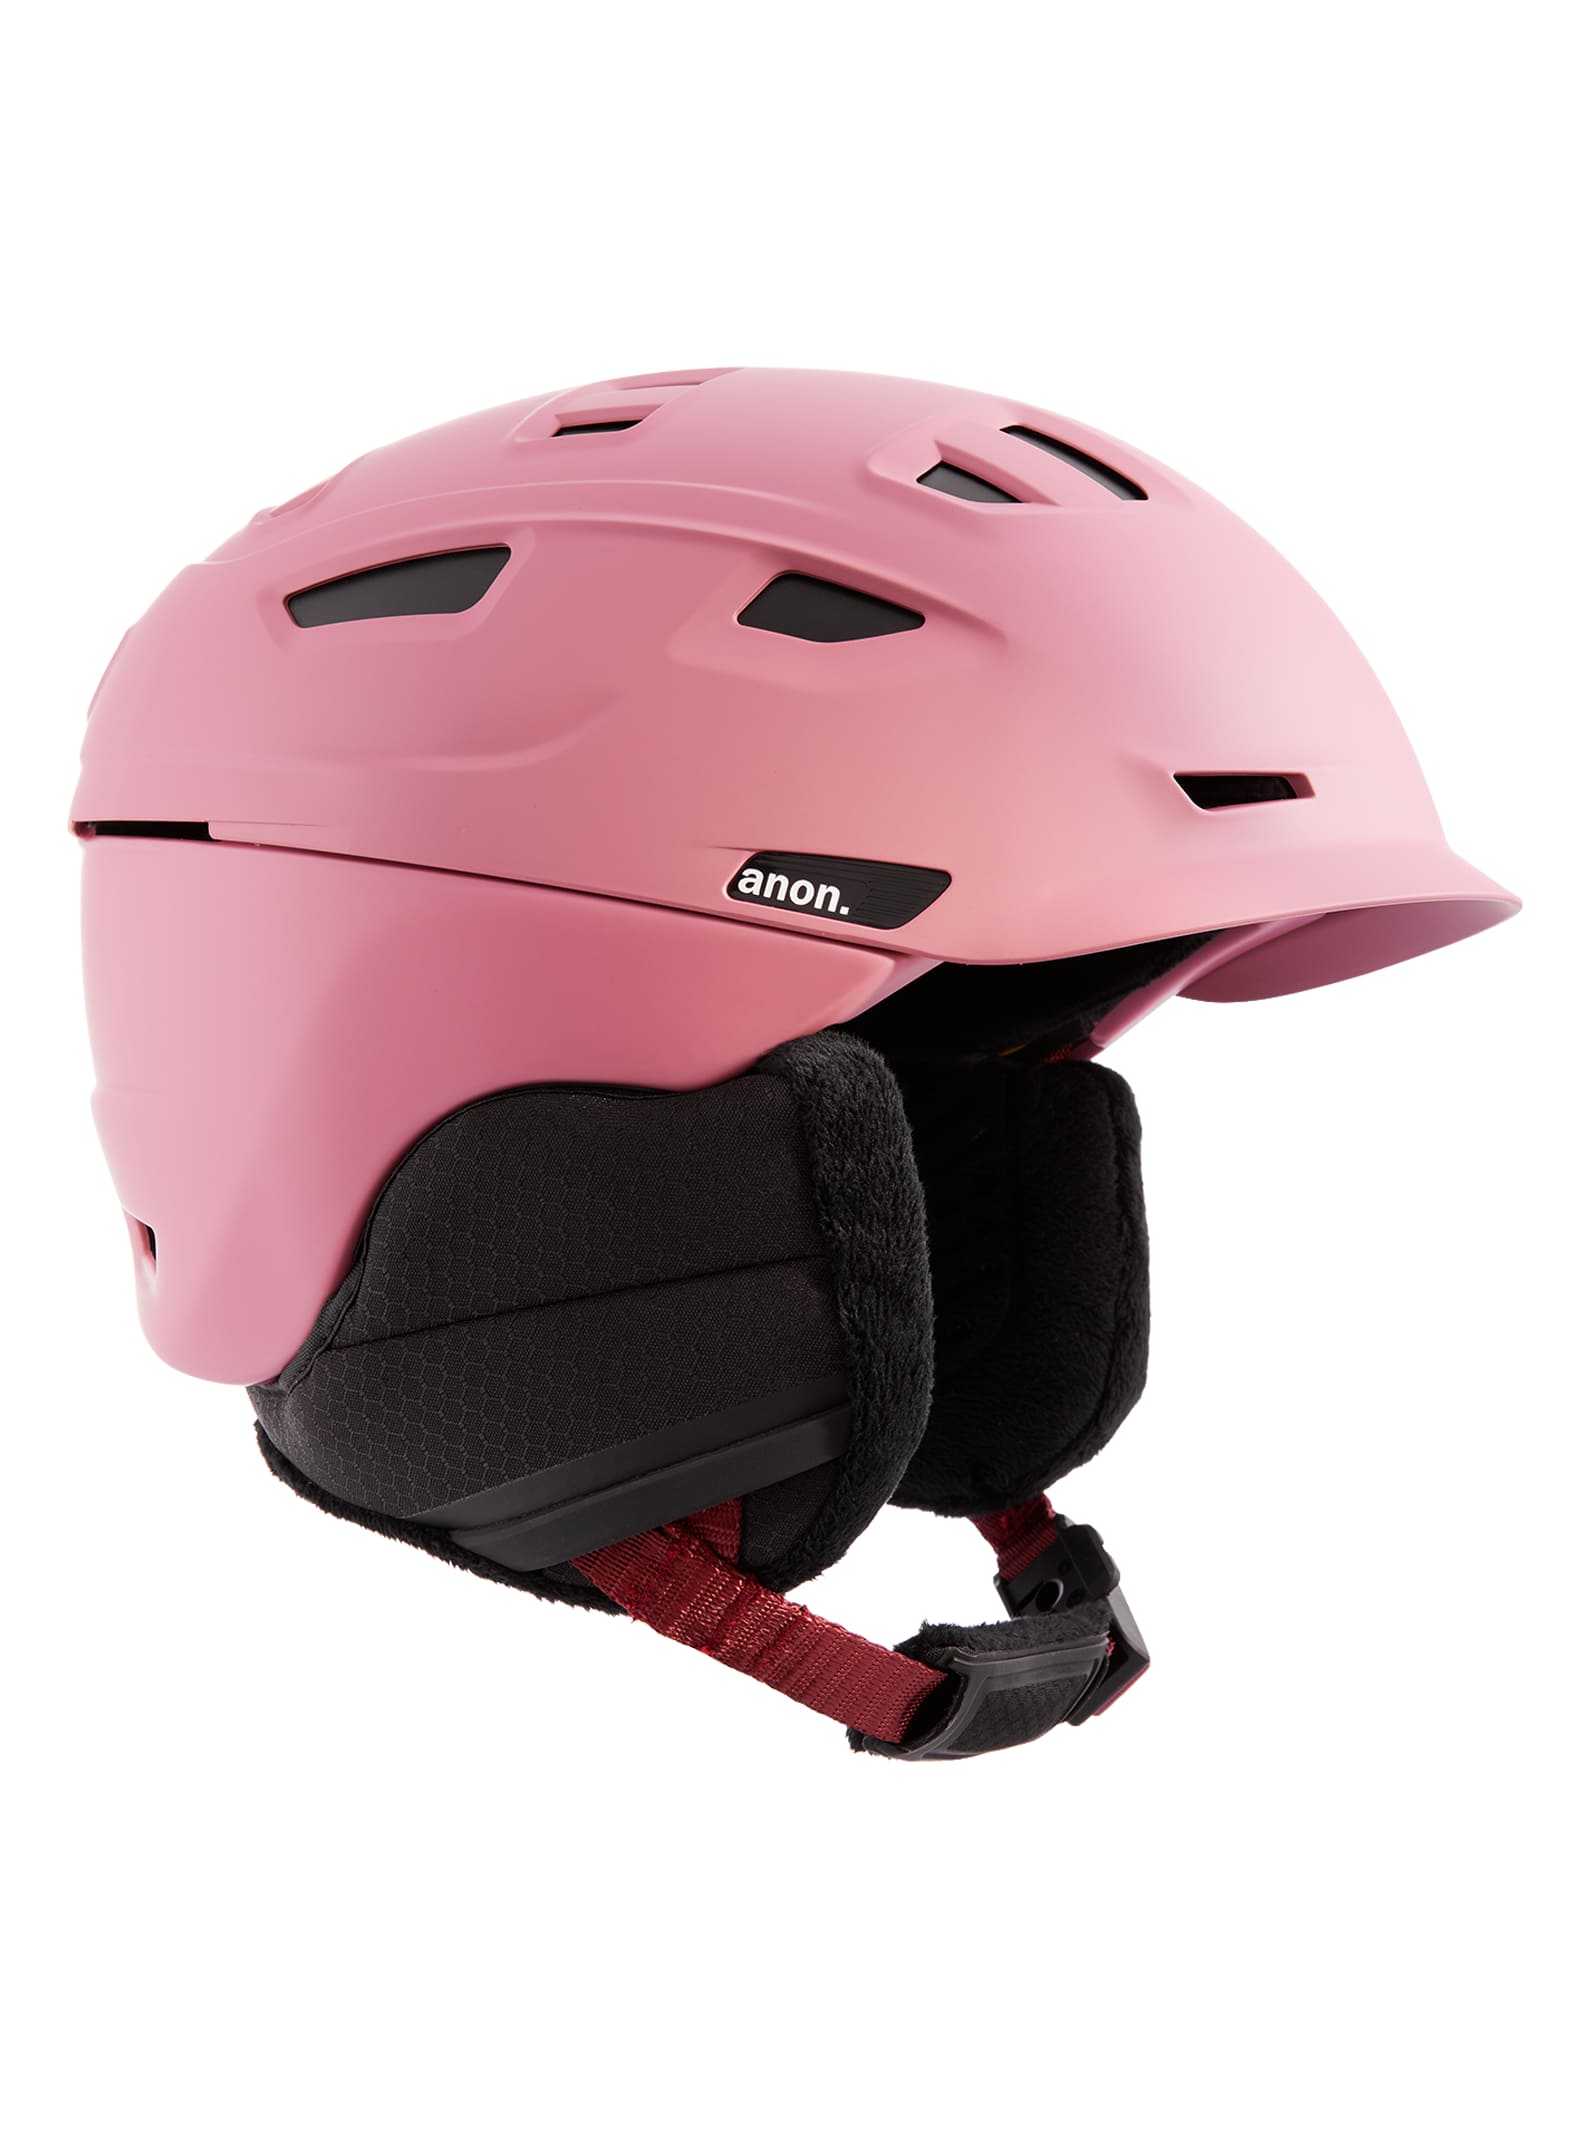 Anon Nova MIPS® Helmet | Burton.com Winter 2022 IT